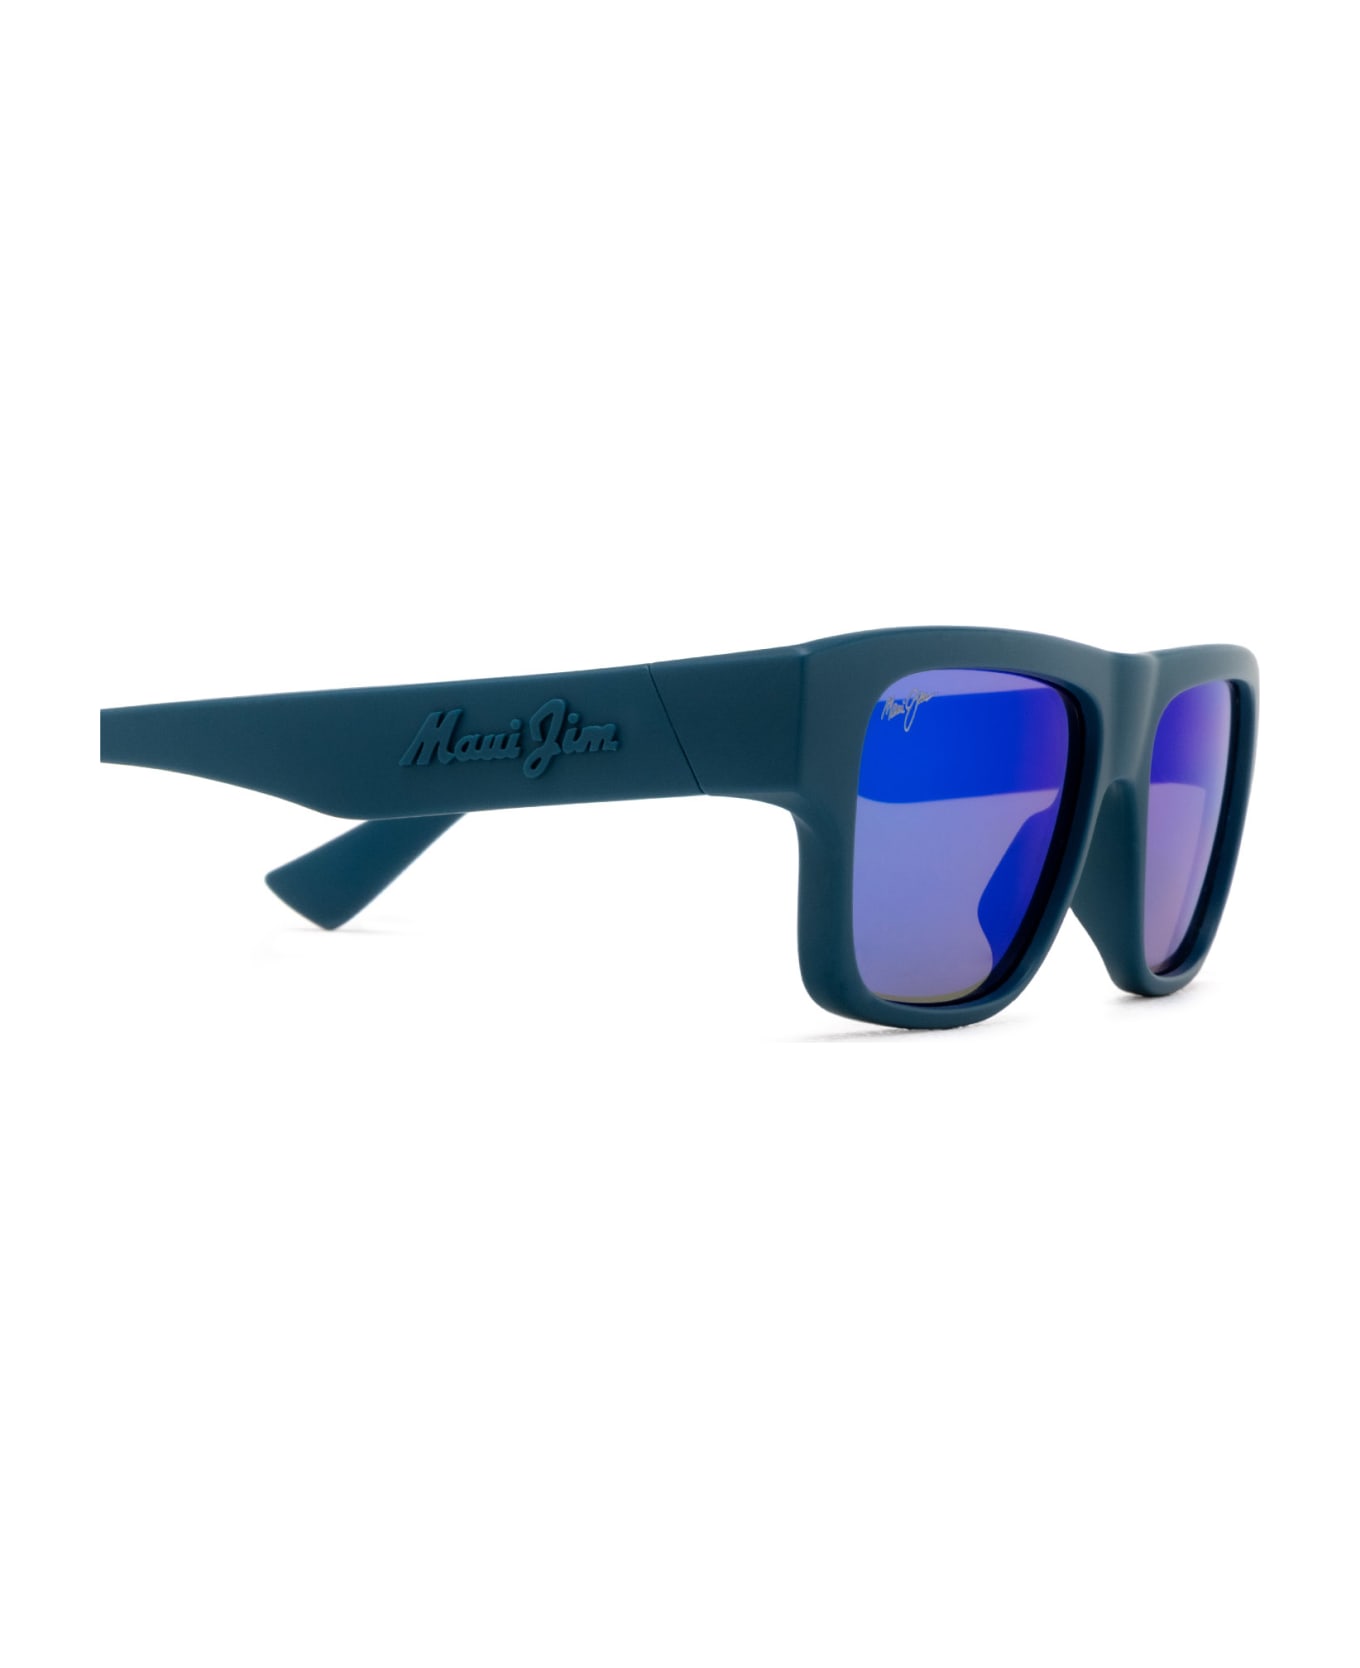 Maui Jim Mj638 Matte Petrol Blue Sunglasses - Matte Petrol Blue サングラス